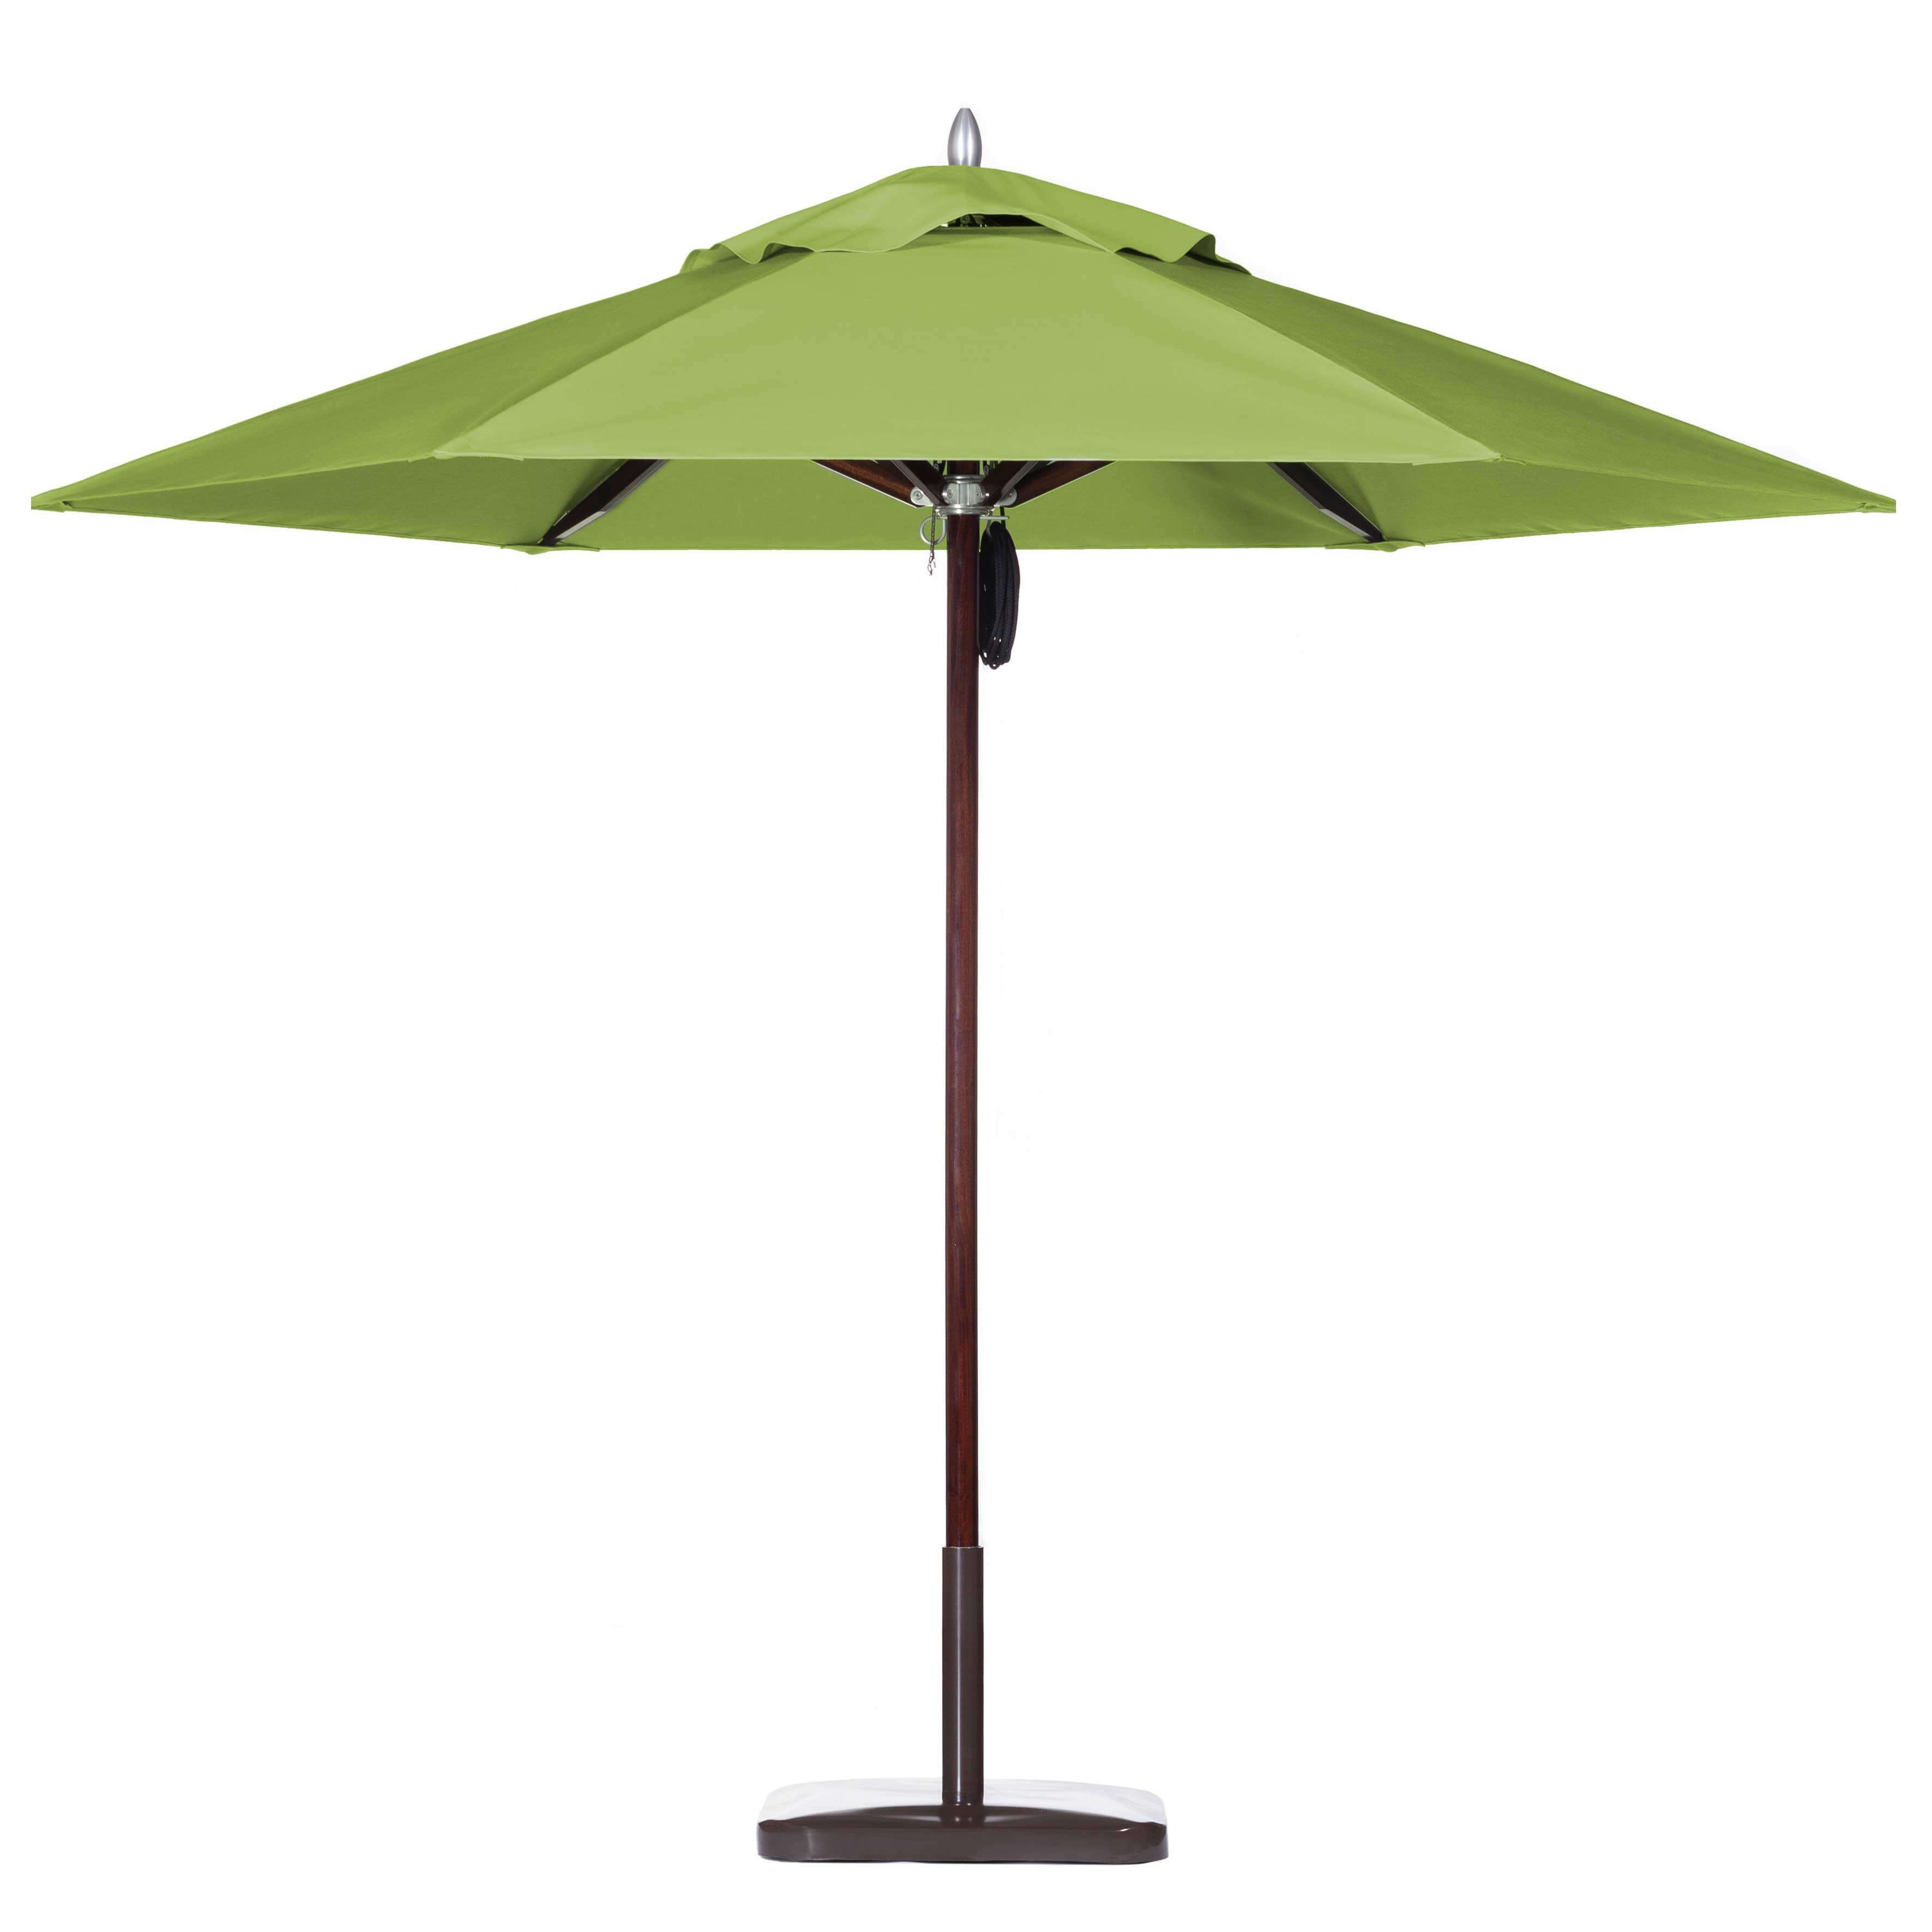 Kiwi Green Umbrella Image